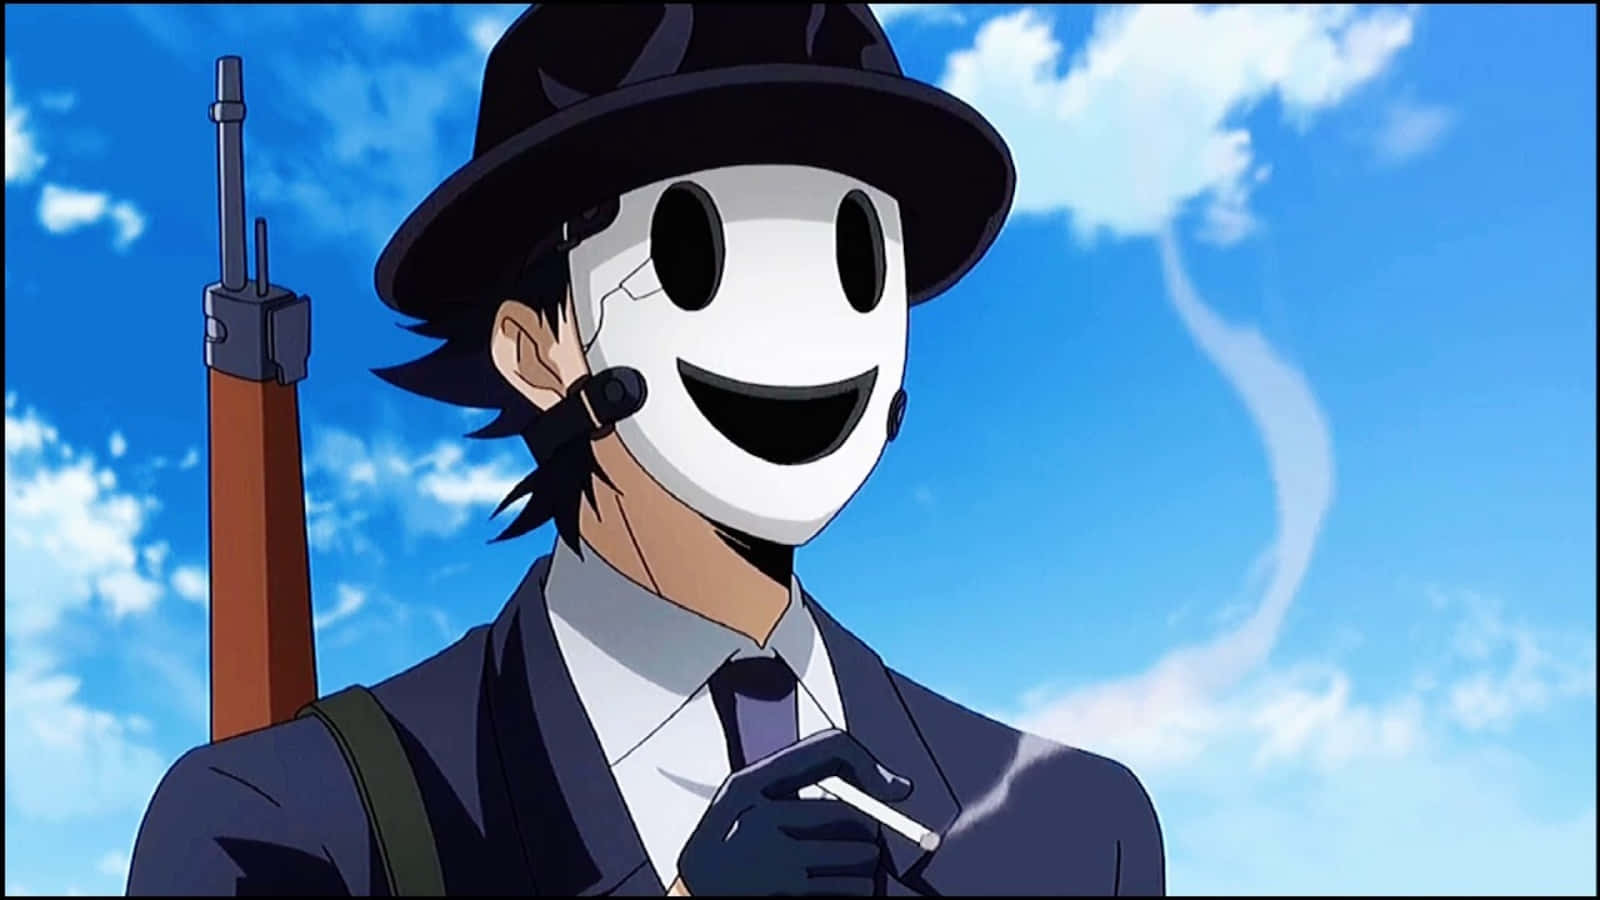 Sniper Mask Smiling Anime Character Wallpaper